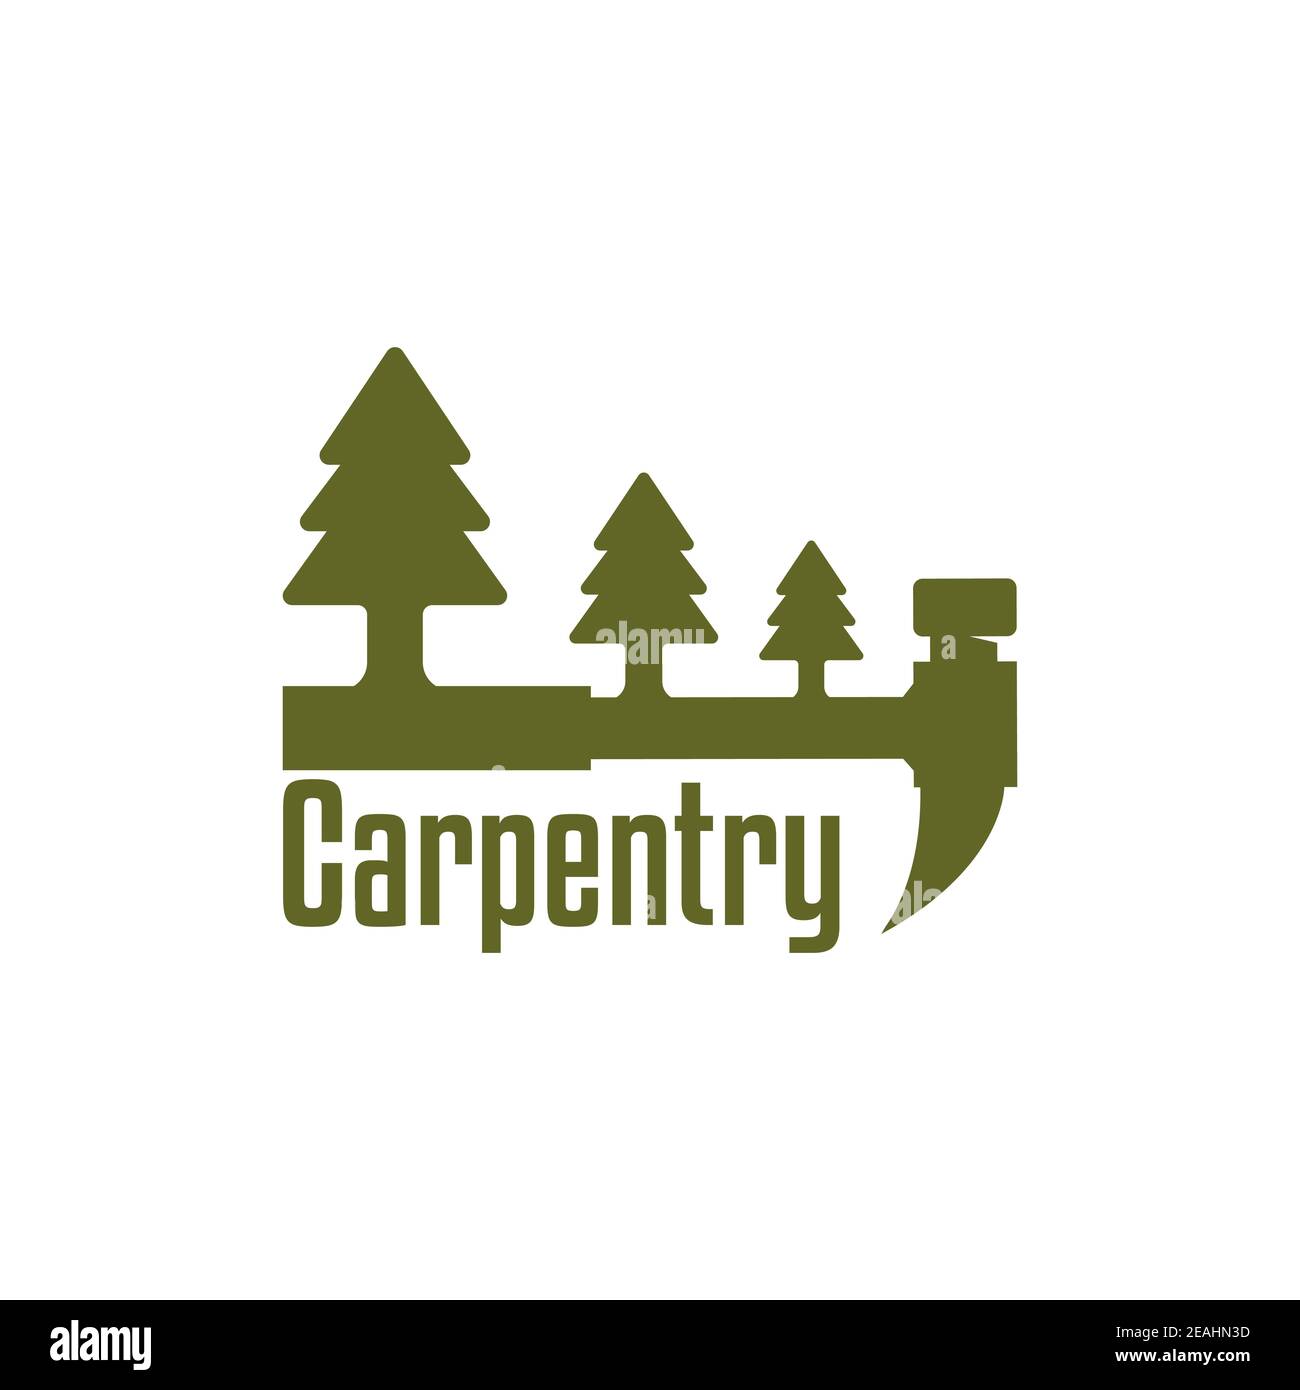 Carpentry logo design inspiration. Hammer with tree symbol for wood work logo Stock Vector